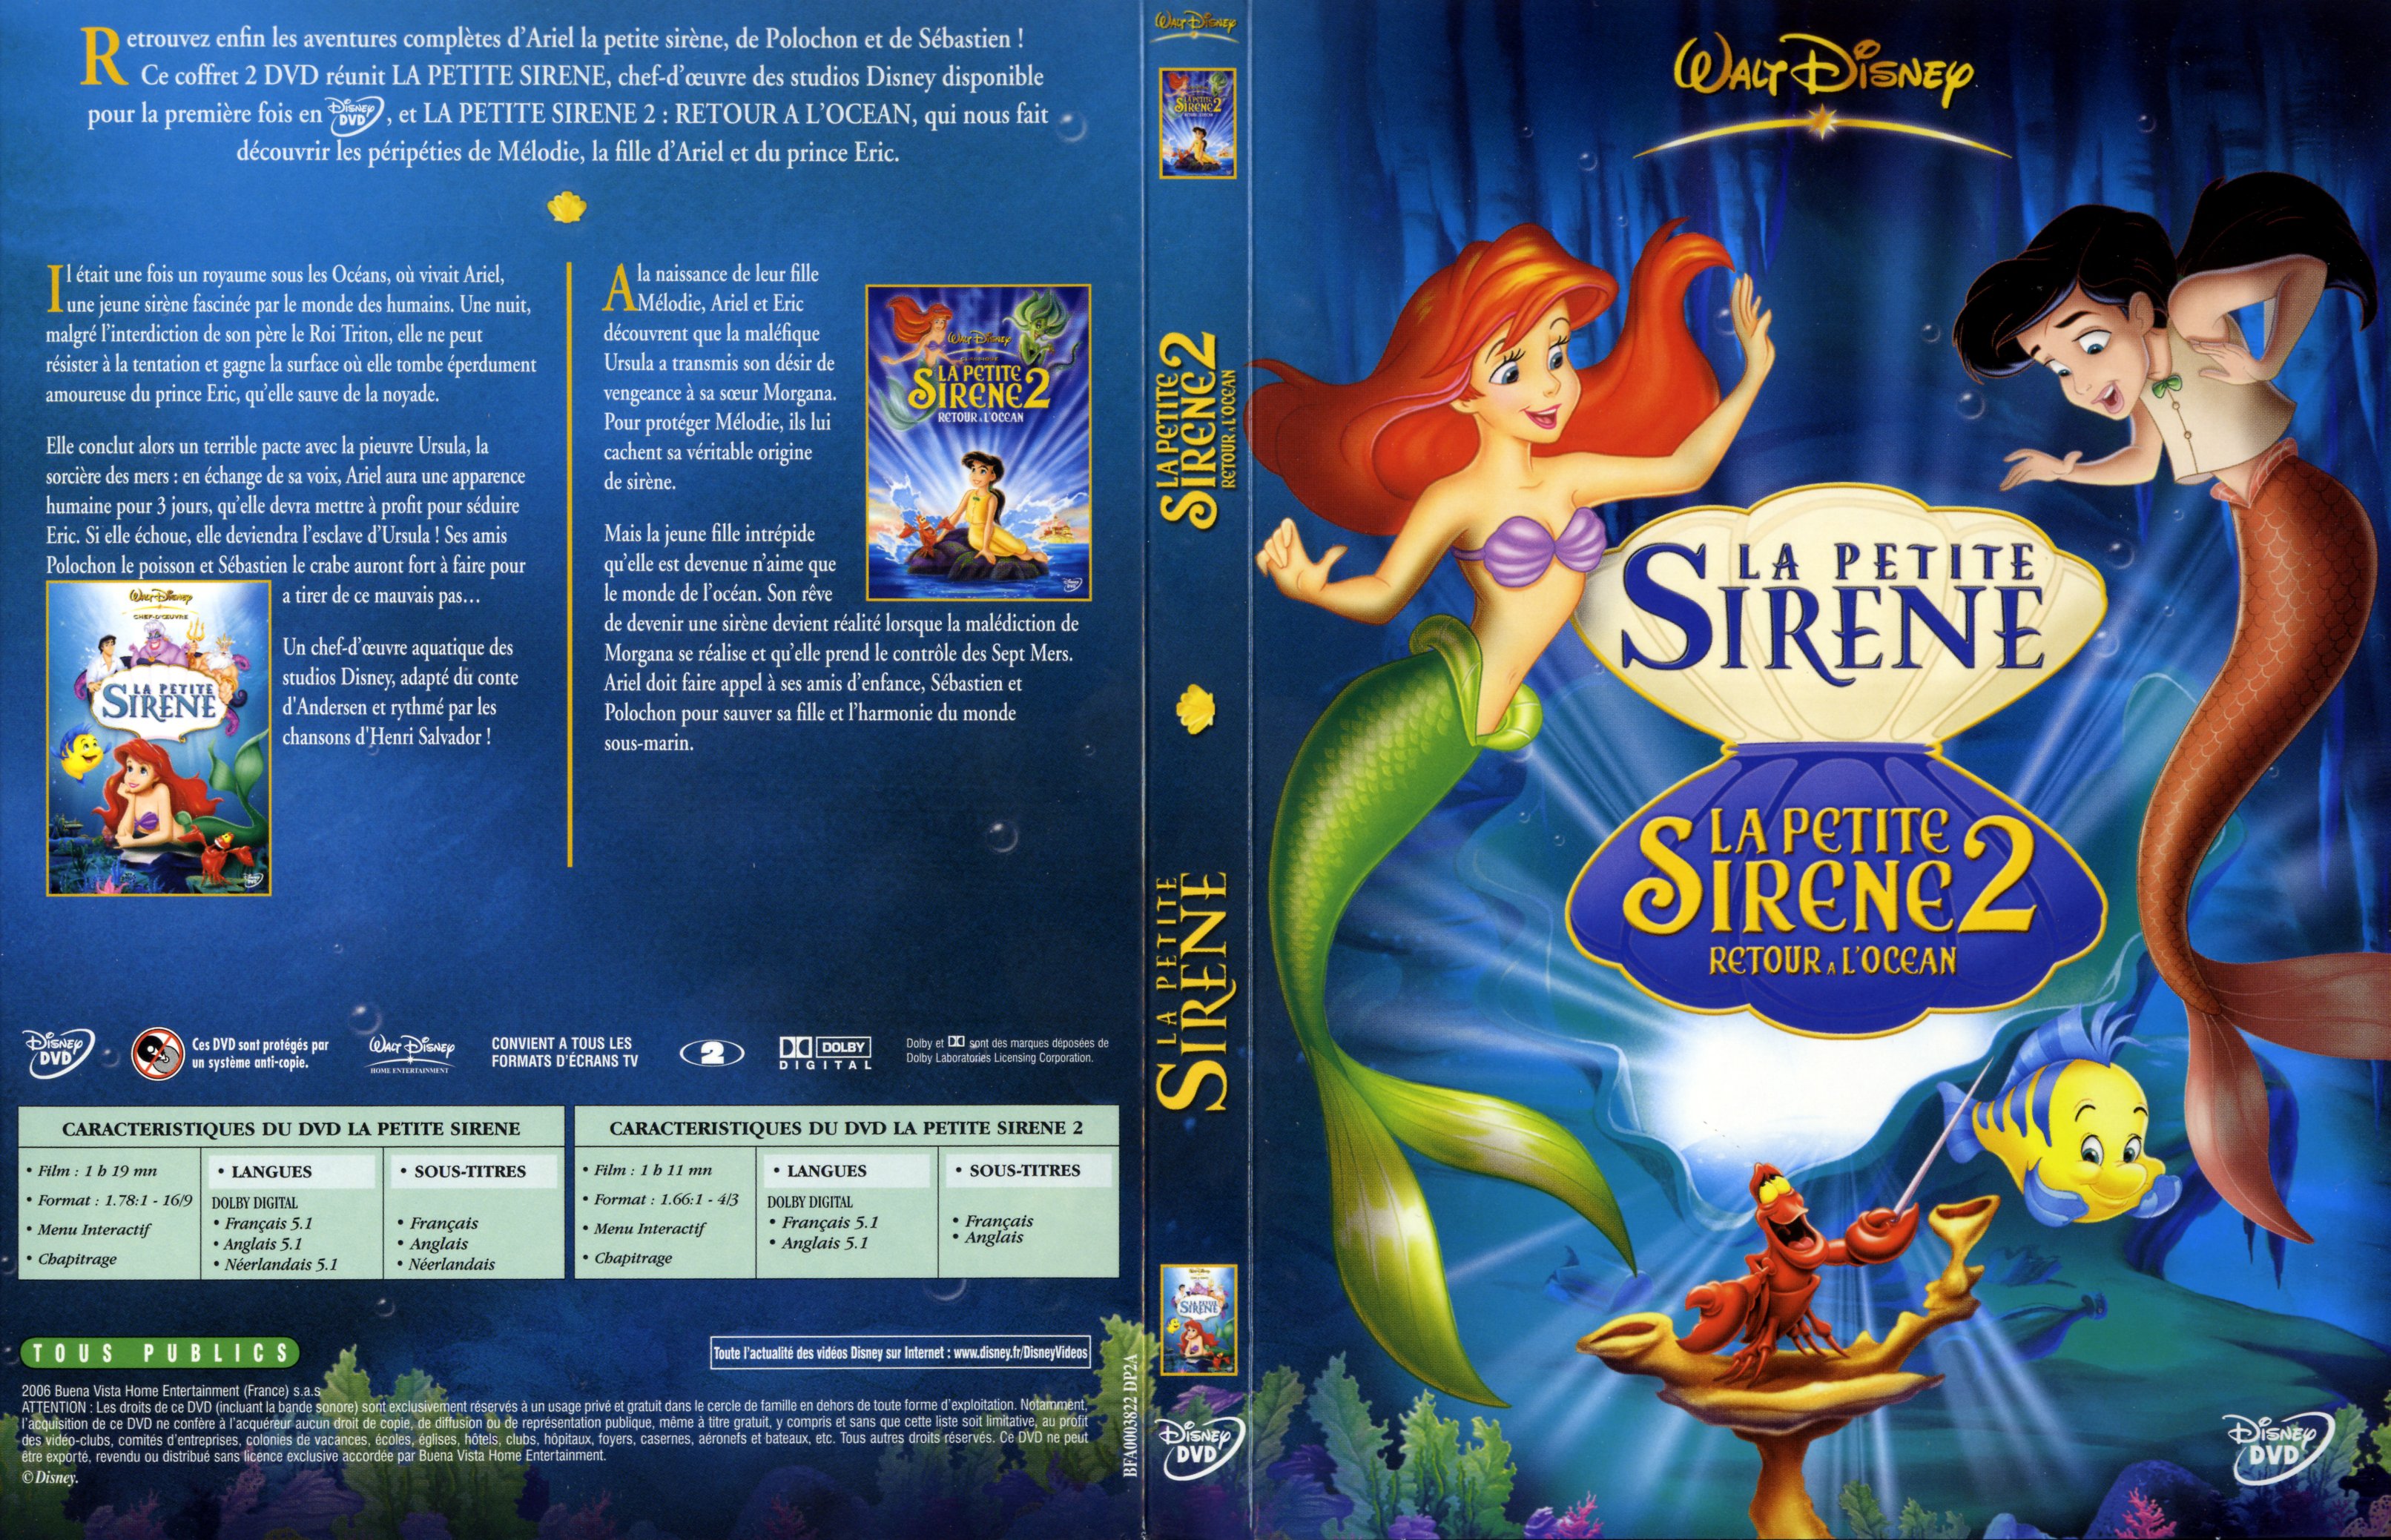 Jaquette DVD La petite sirene 1 et 2 v2